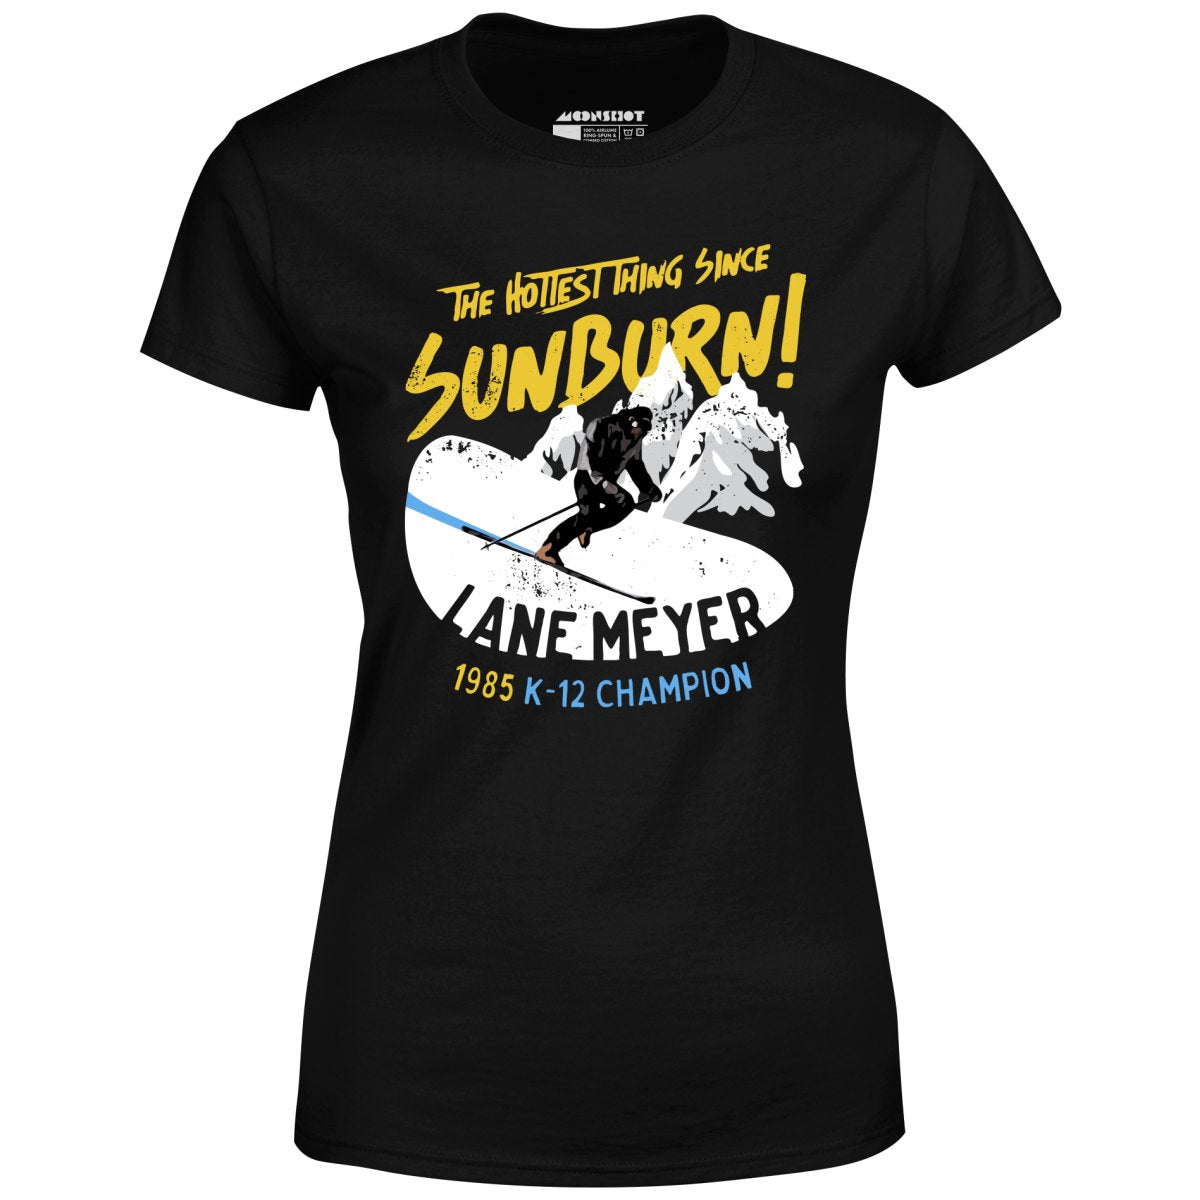 Lane Meyer - The Hottest Thing Since Sunburn - Women's T-Shirt